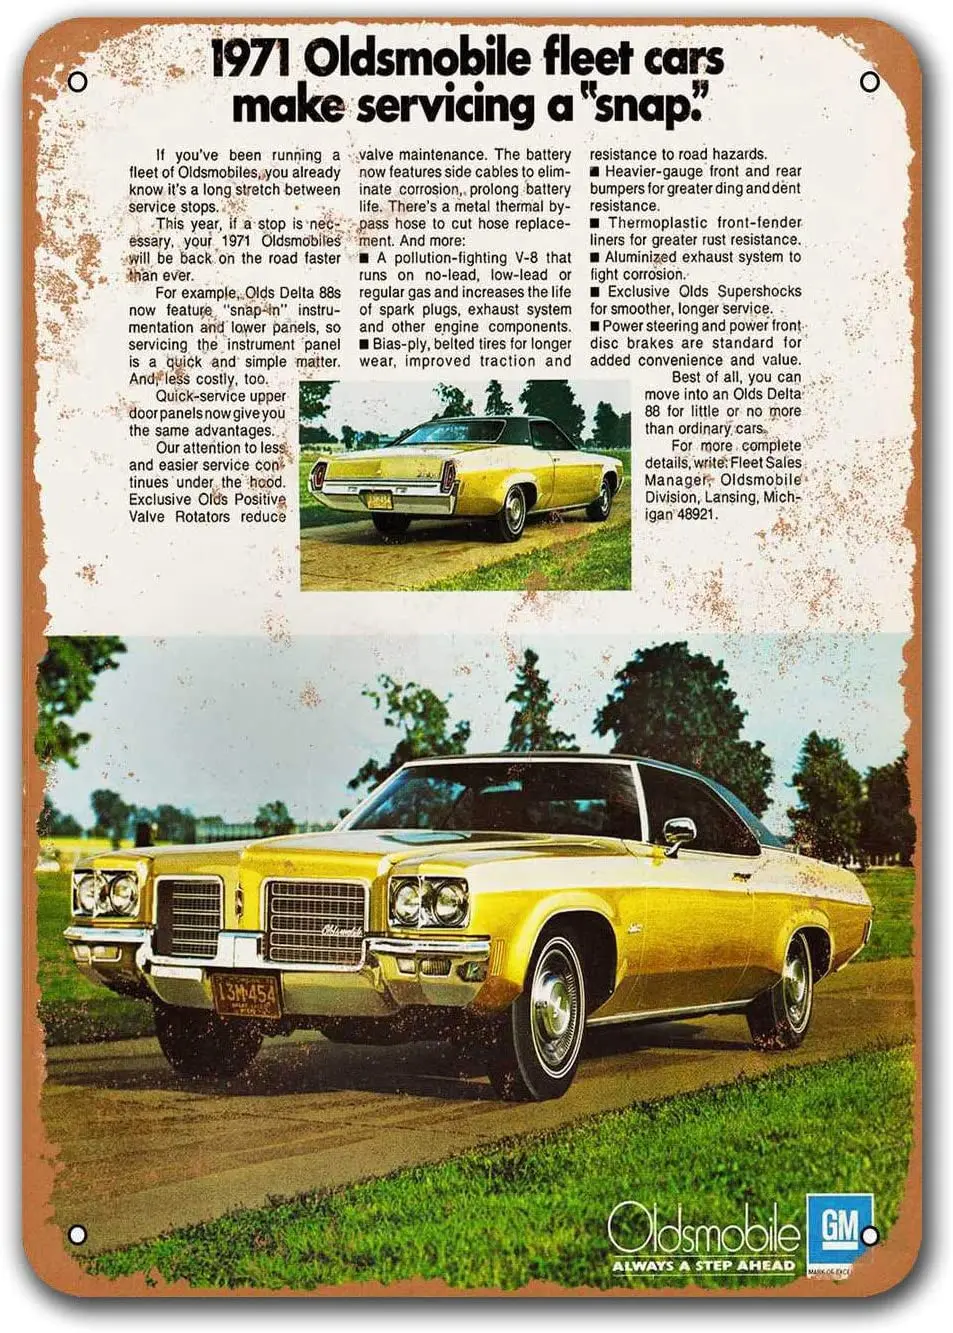 

1971 Oldsmobile Delta 88 Car Tin Signs Vintage, Sisoso Metal Plaques Poster Pub Garage Retro Wall Decor 8x12 inch